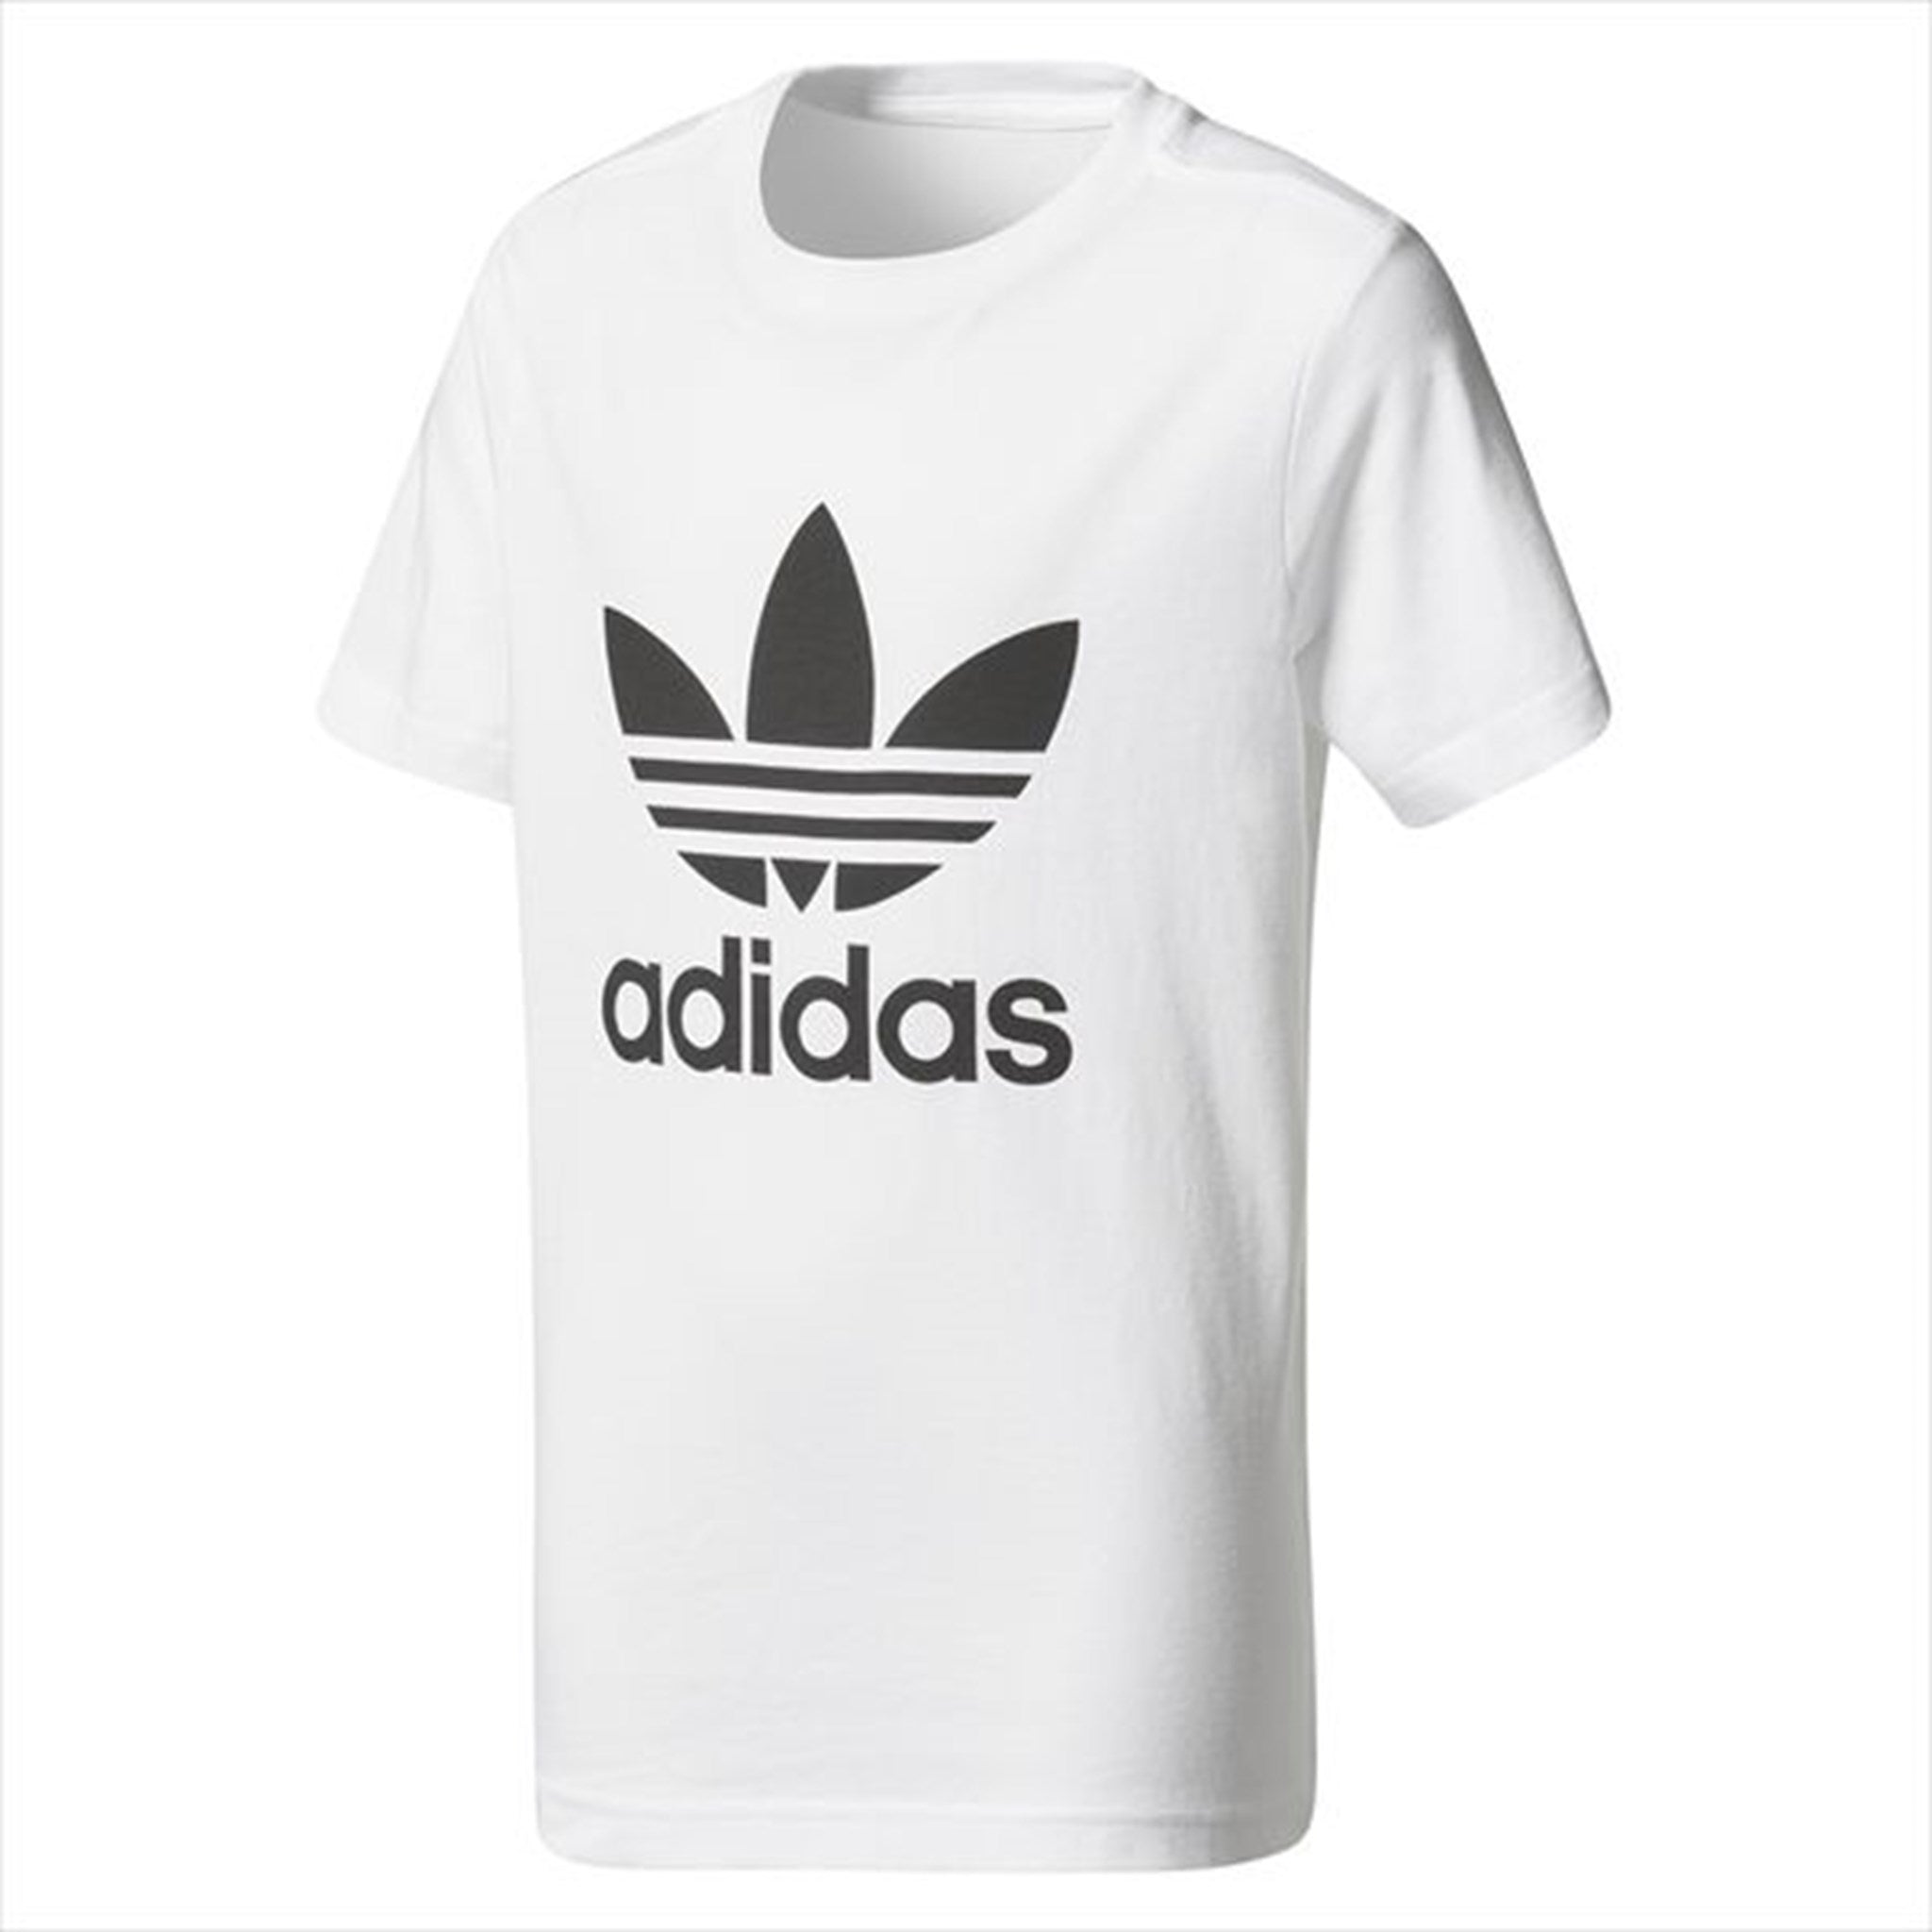 adidas Originals Trefoil T-shirt Hvid - Str. 146 cm